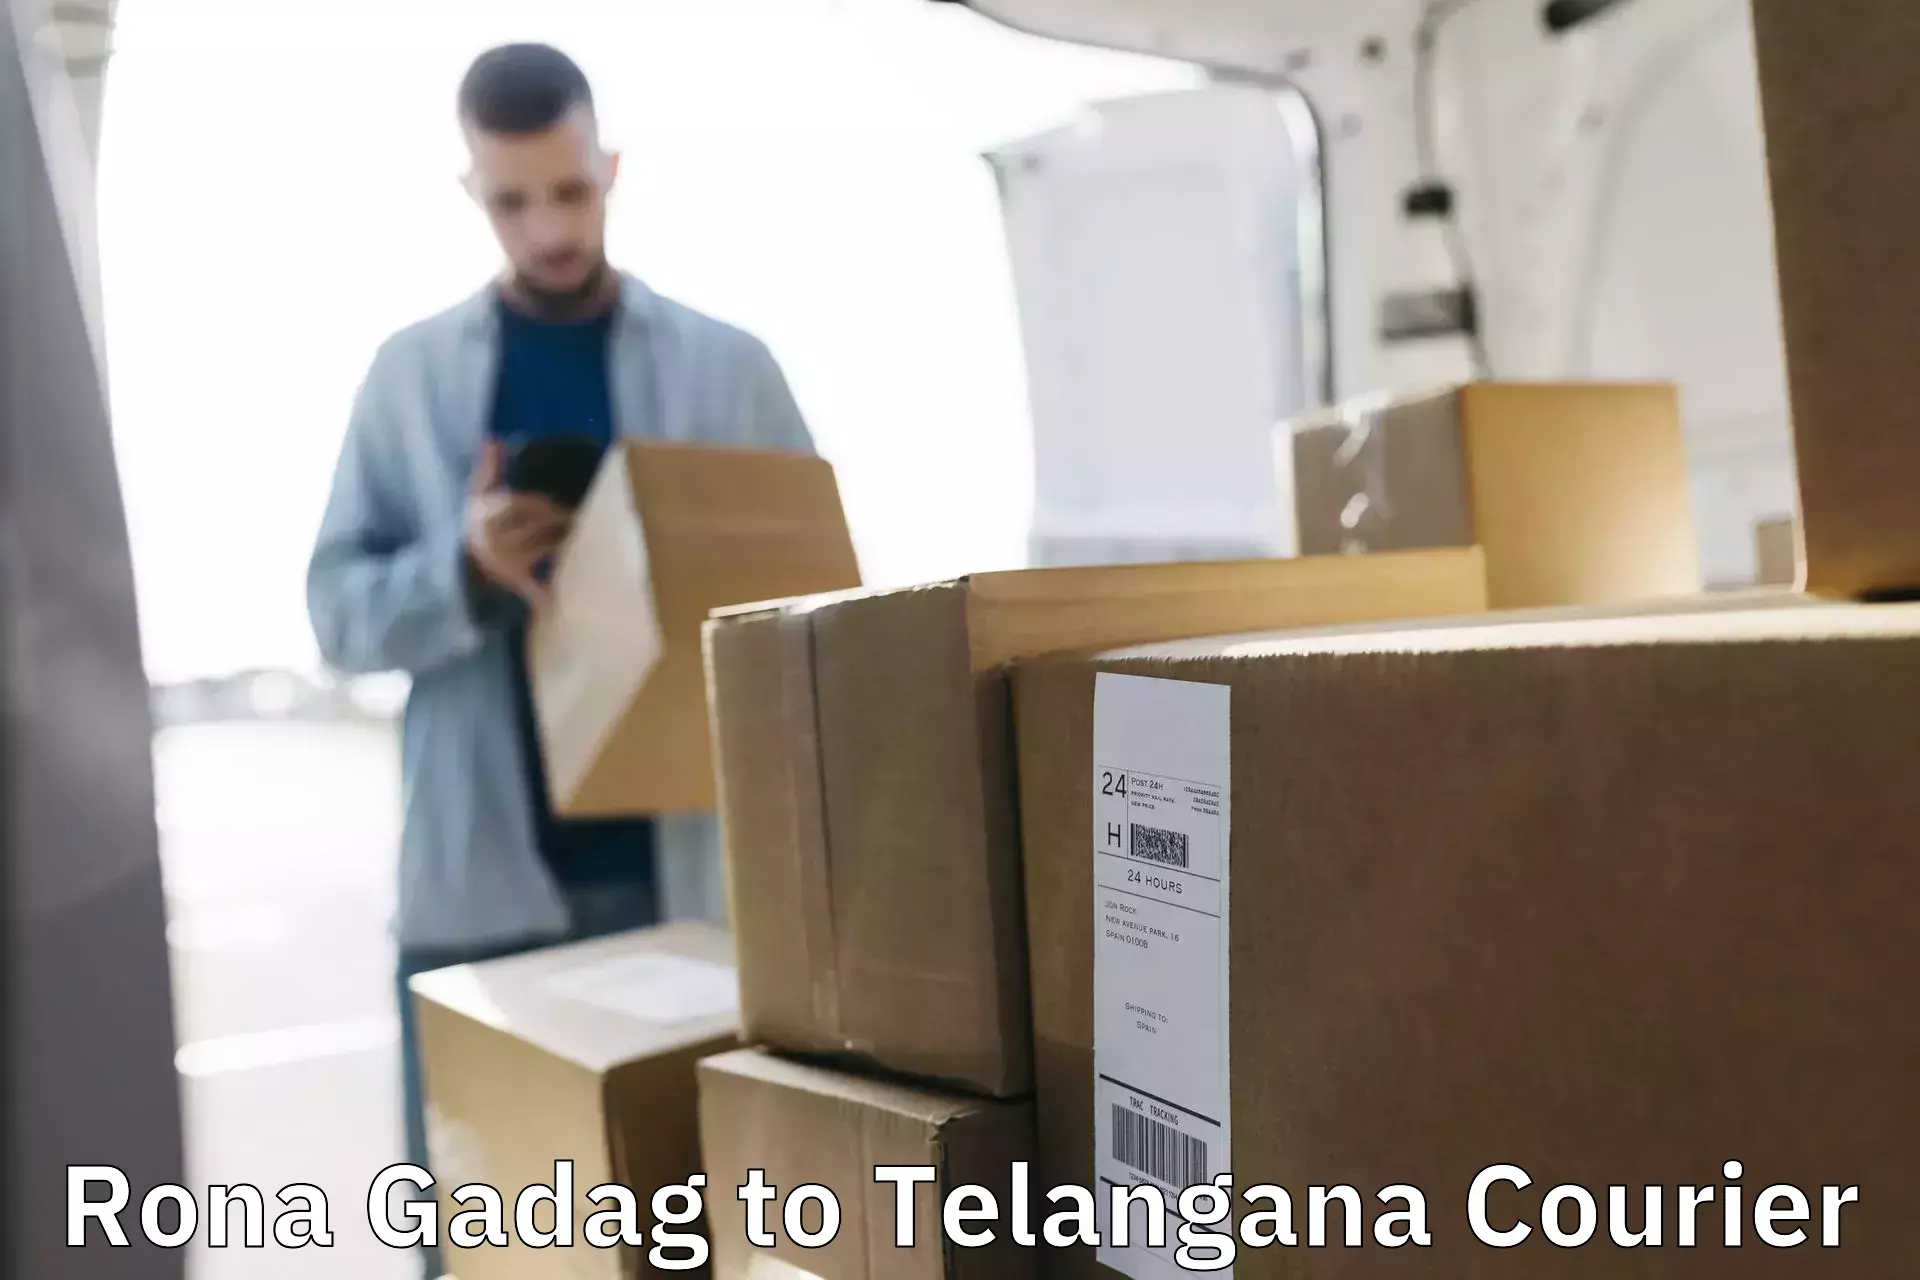 International courier networks Rona Gadag to Telangana